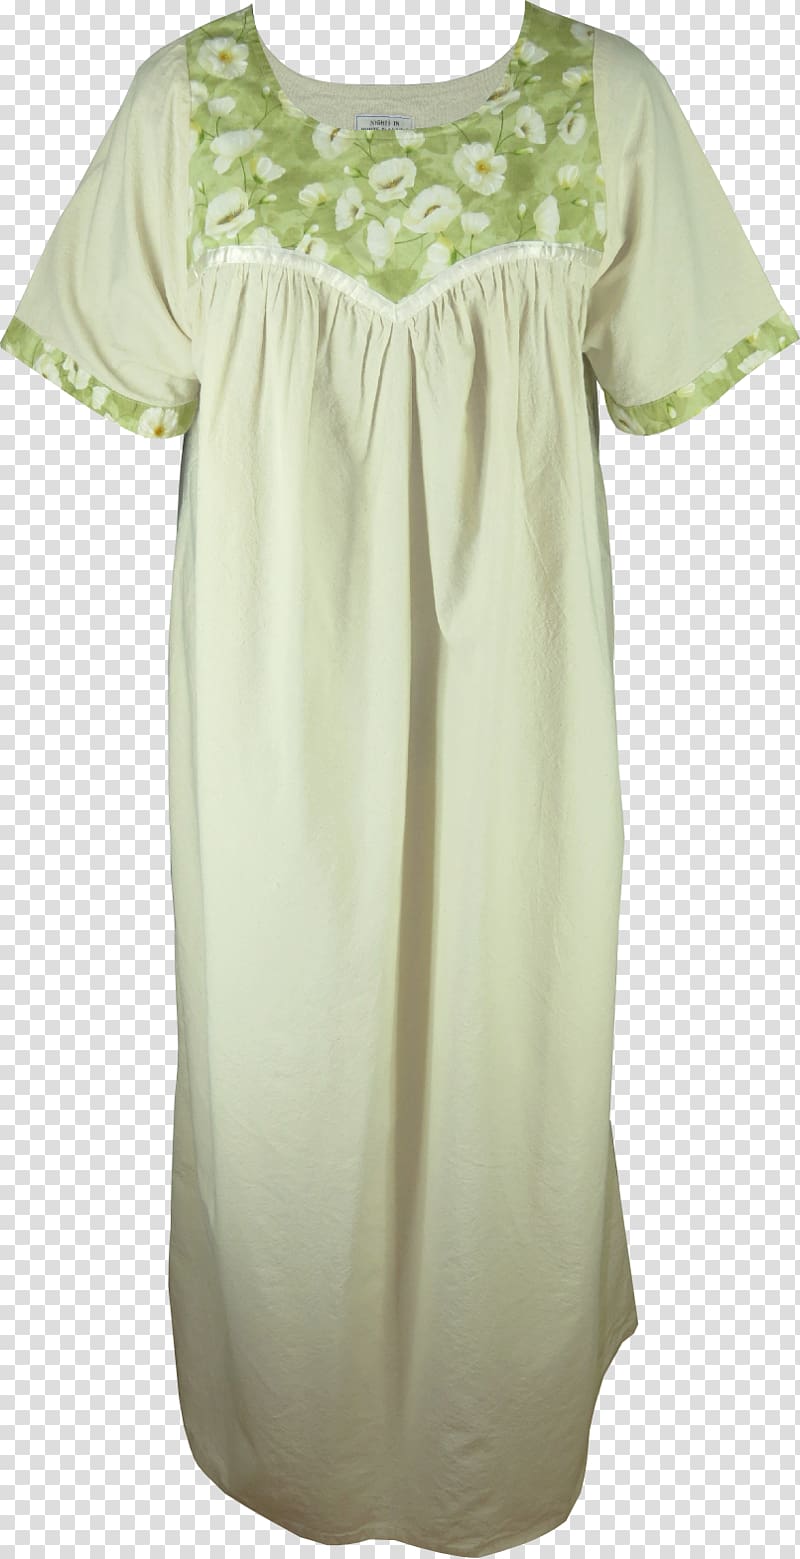 Shoulder Blouse Sleeve Dress, nightdress transparent background PNG clipart